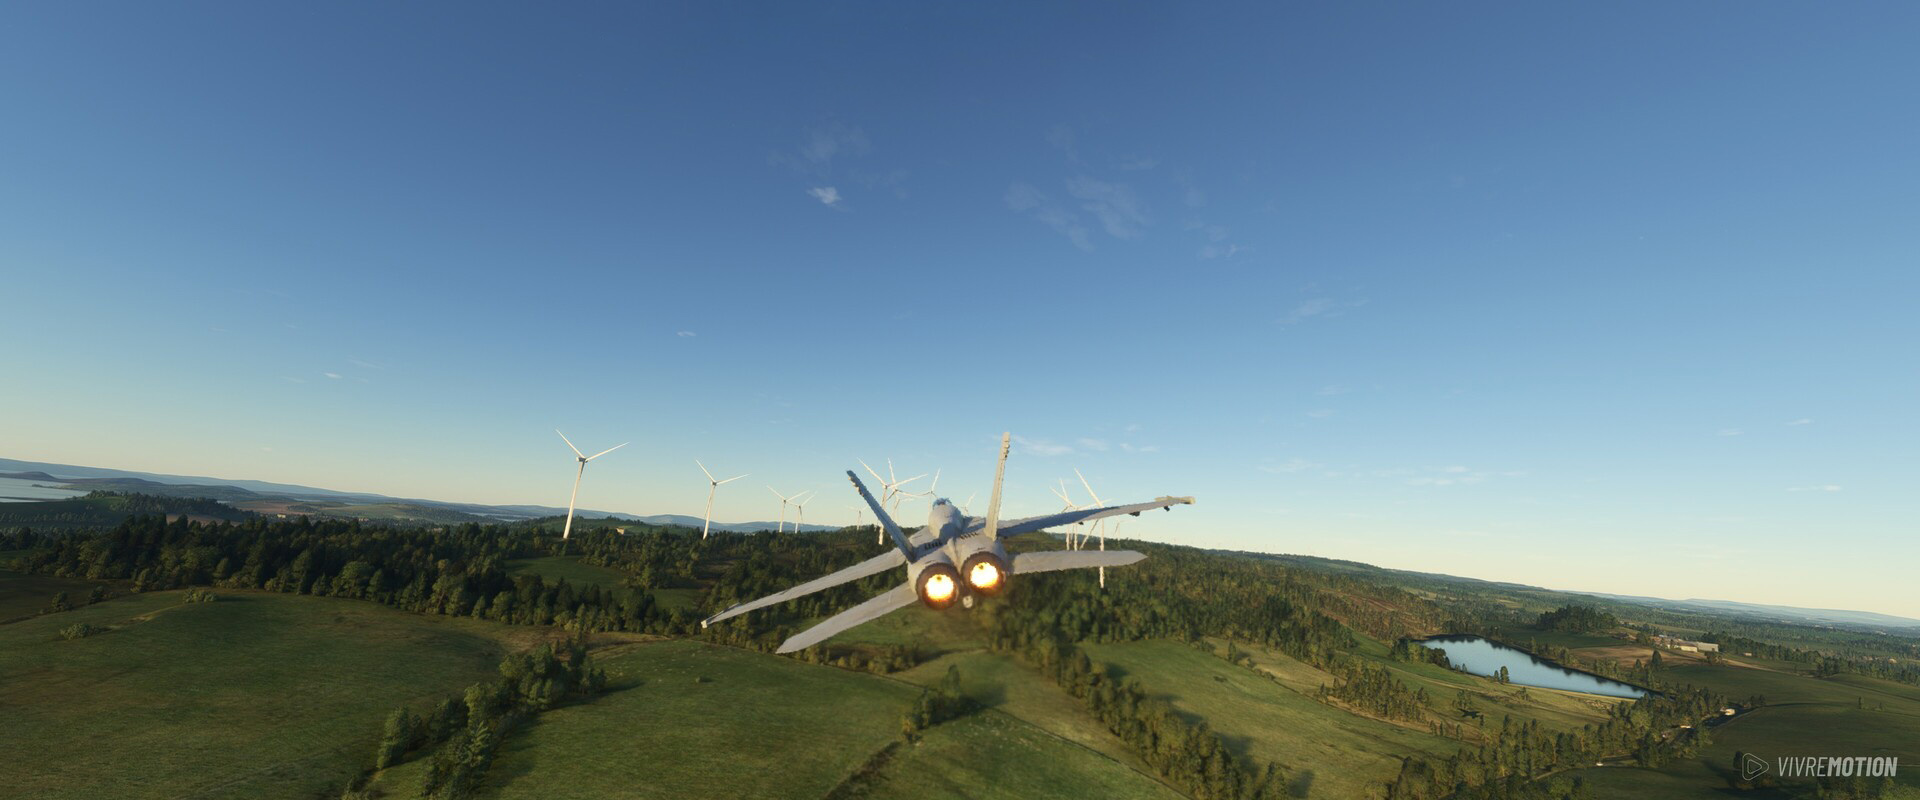 near Edinburgh, Schottland - Boeing F/A-18 Super Hornet - Microsoft Flight Simulator - VIVRE-MOTION